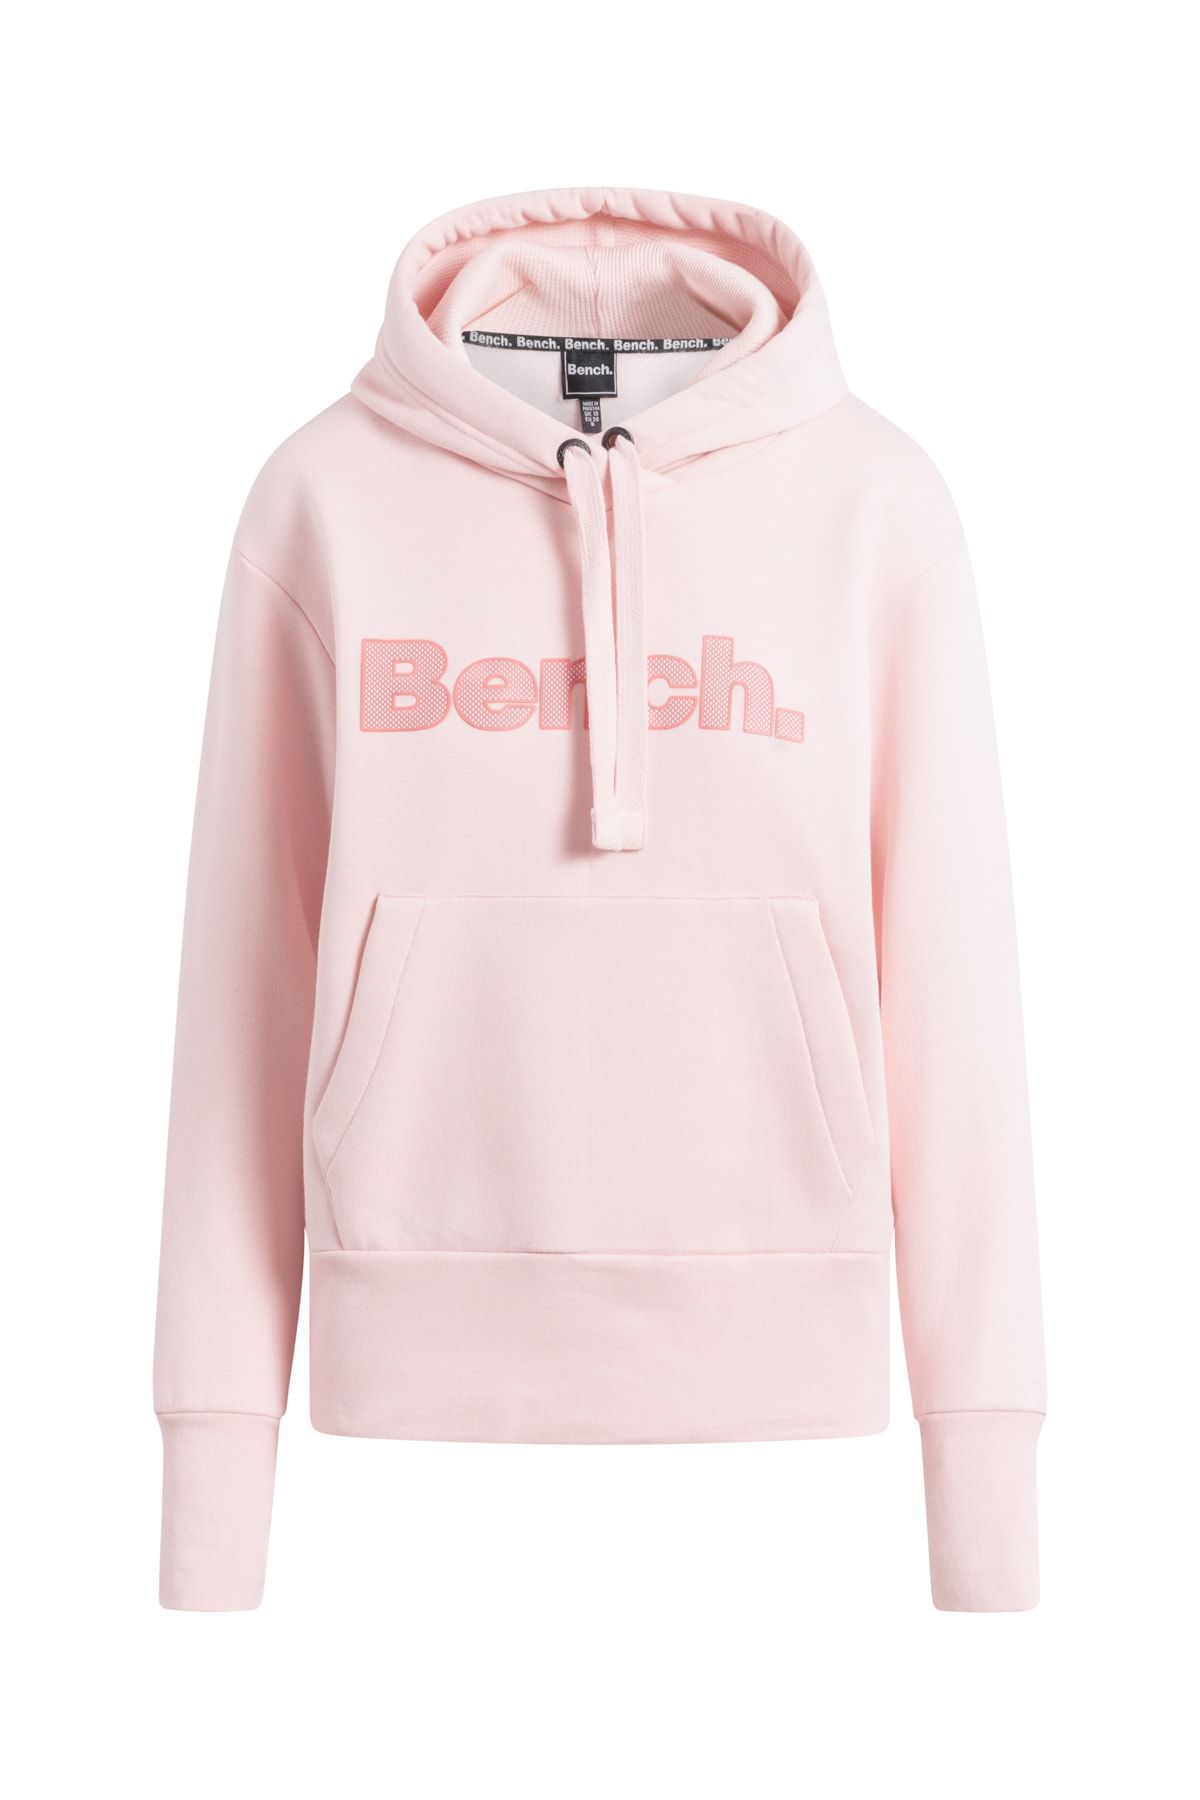 BENCH Sweatshirt - - Rosa Regular Trendyol - Fit